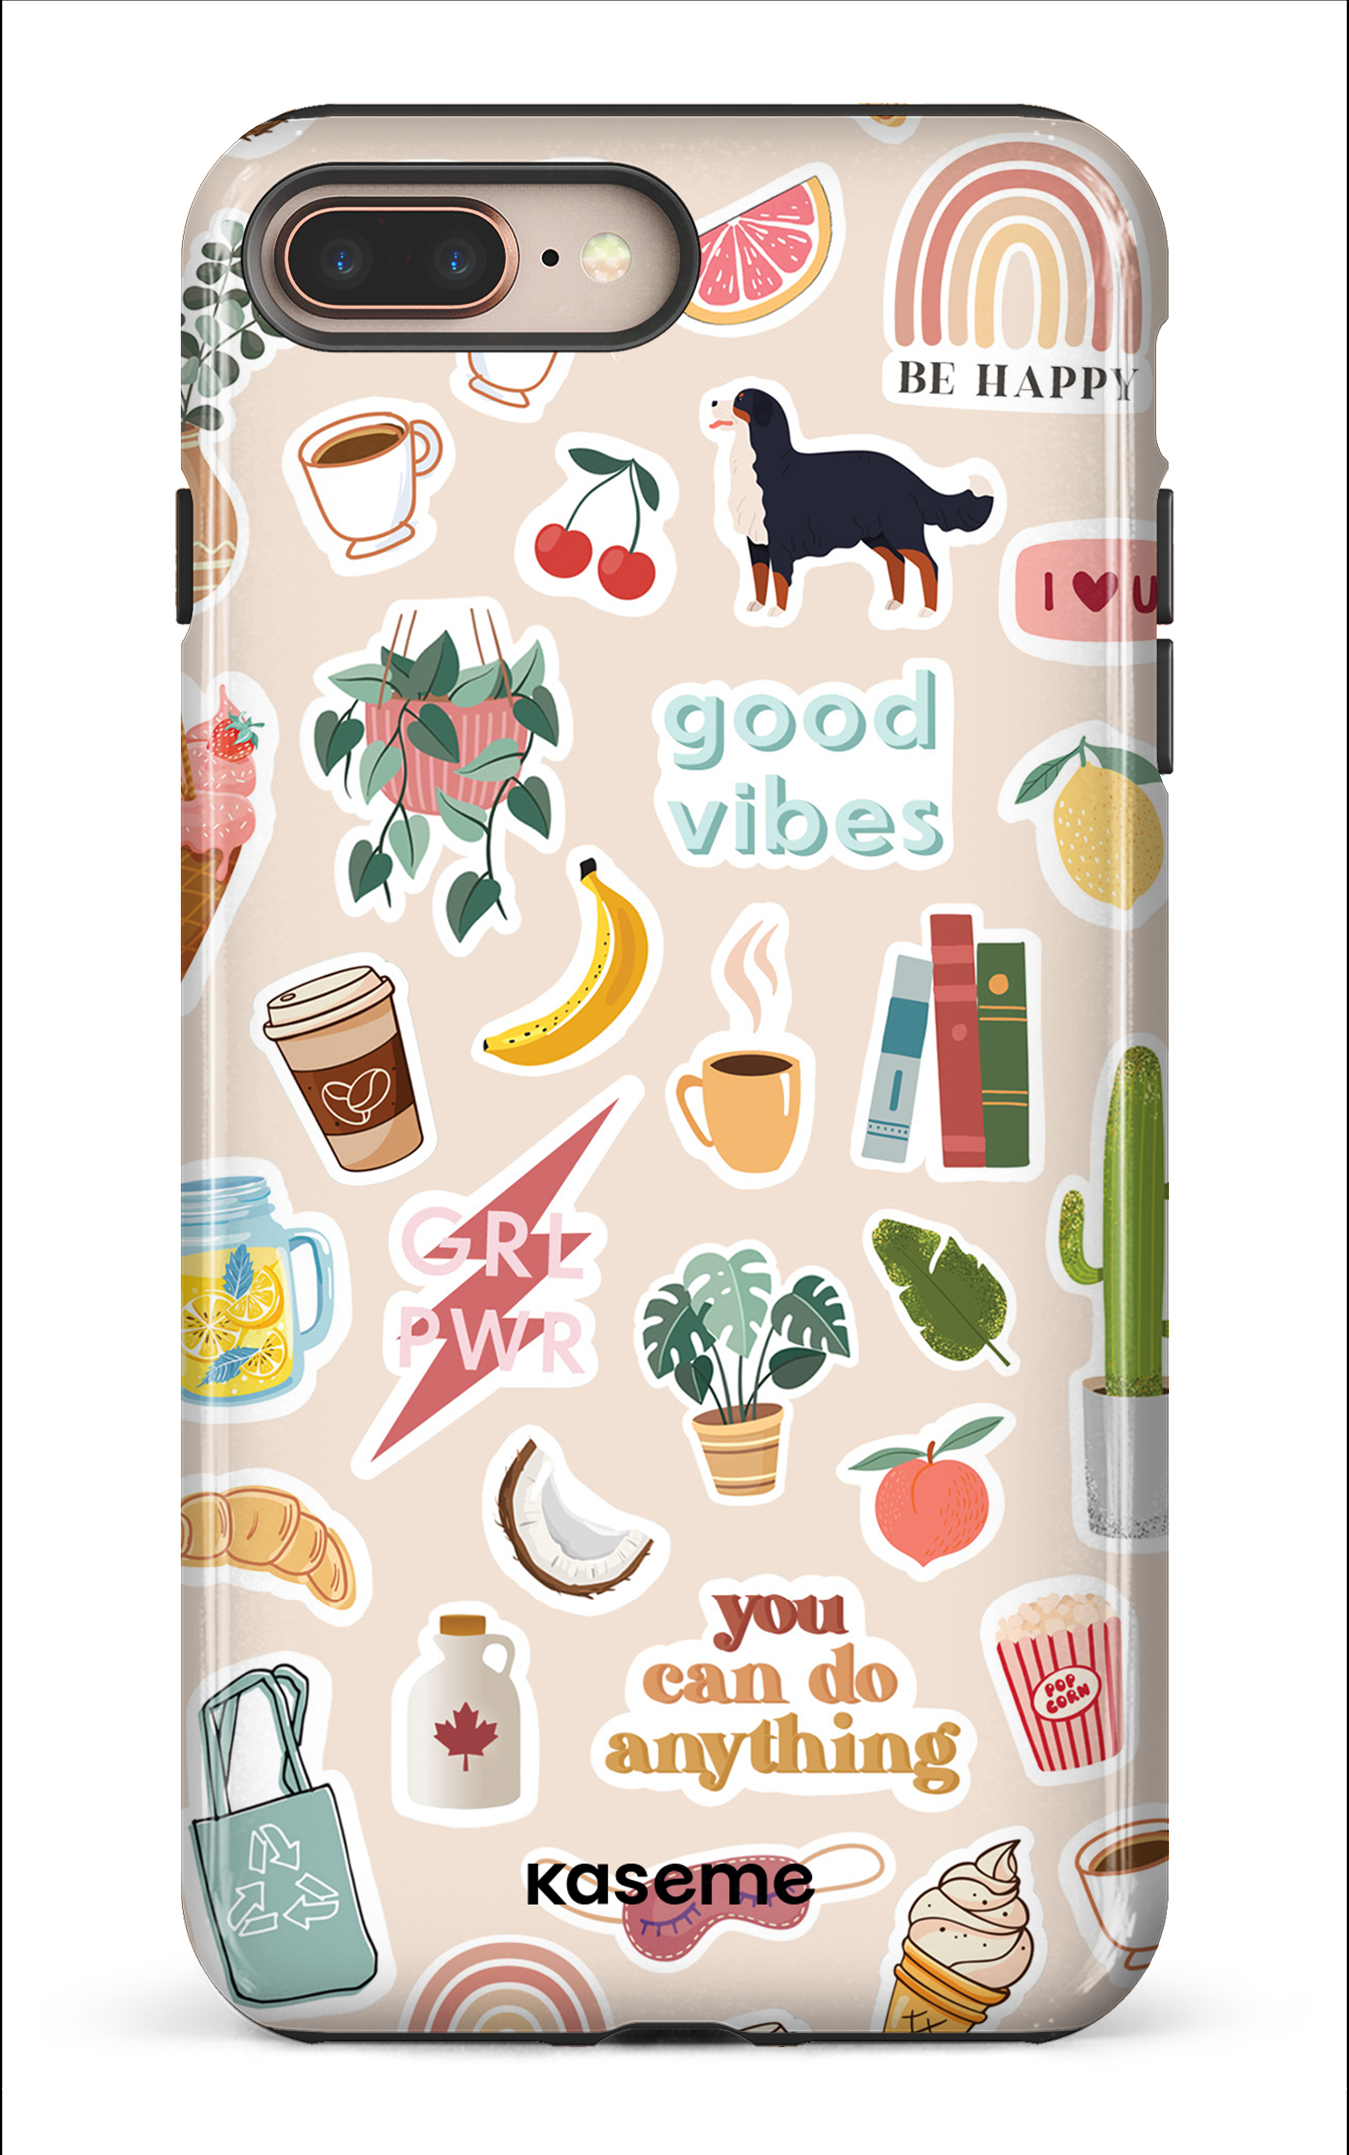 Good vibes - iPhone 8 Plus